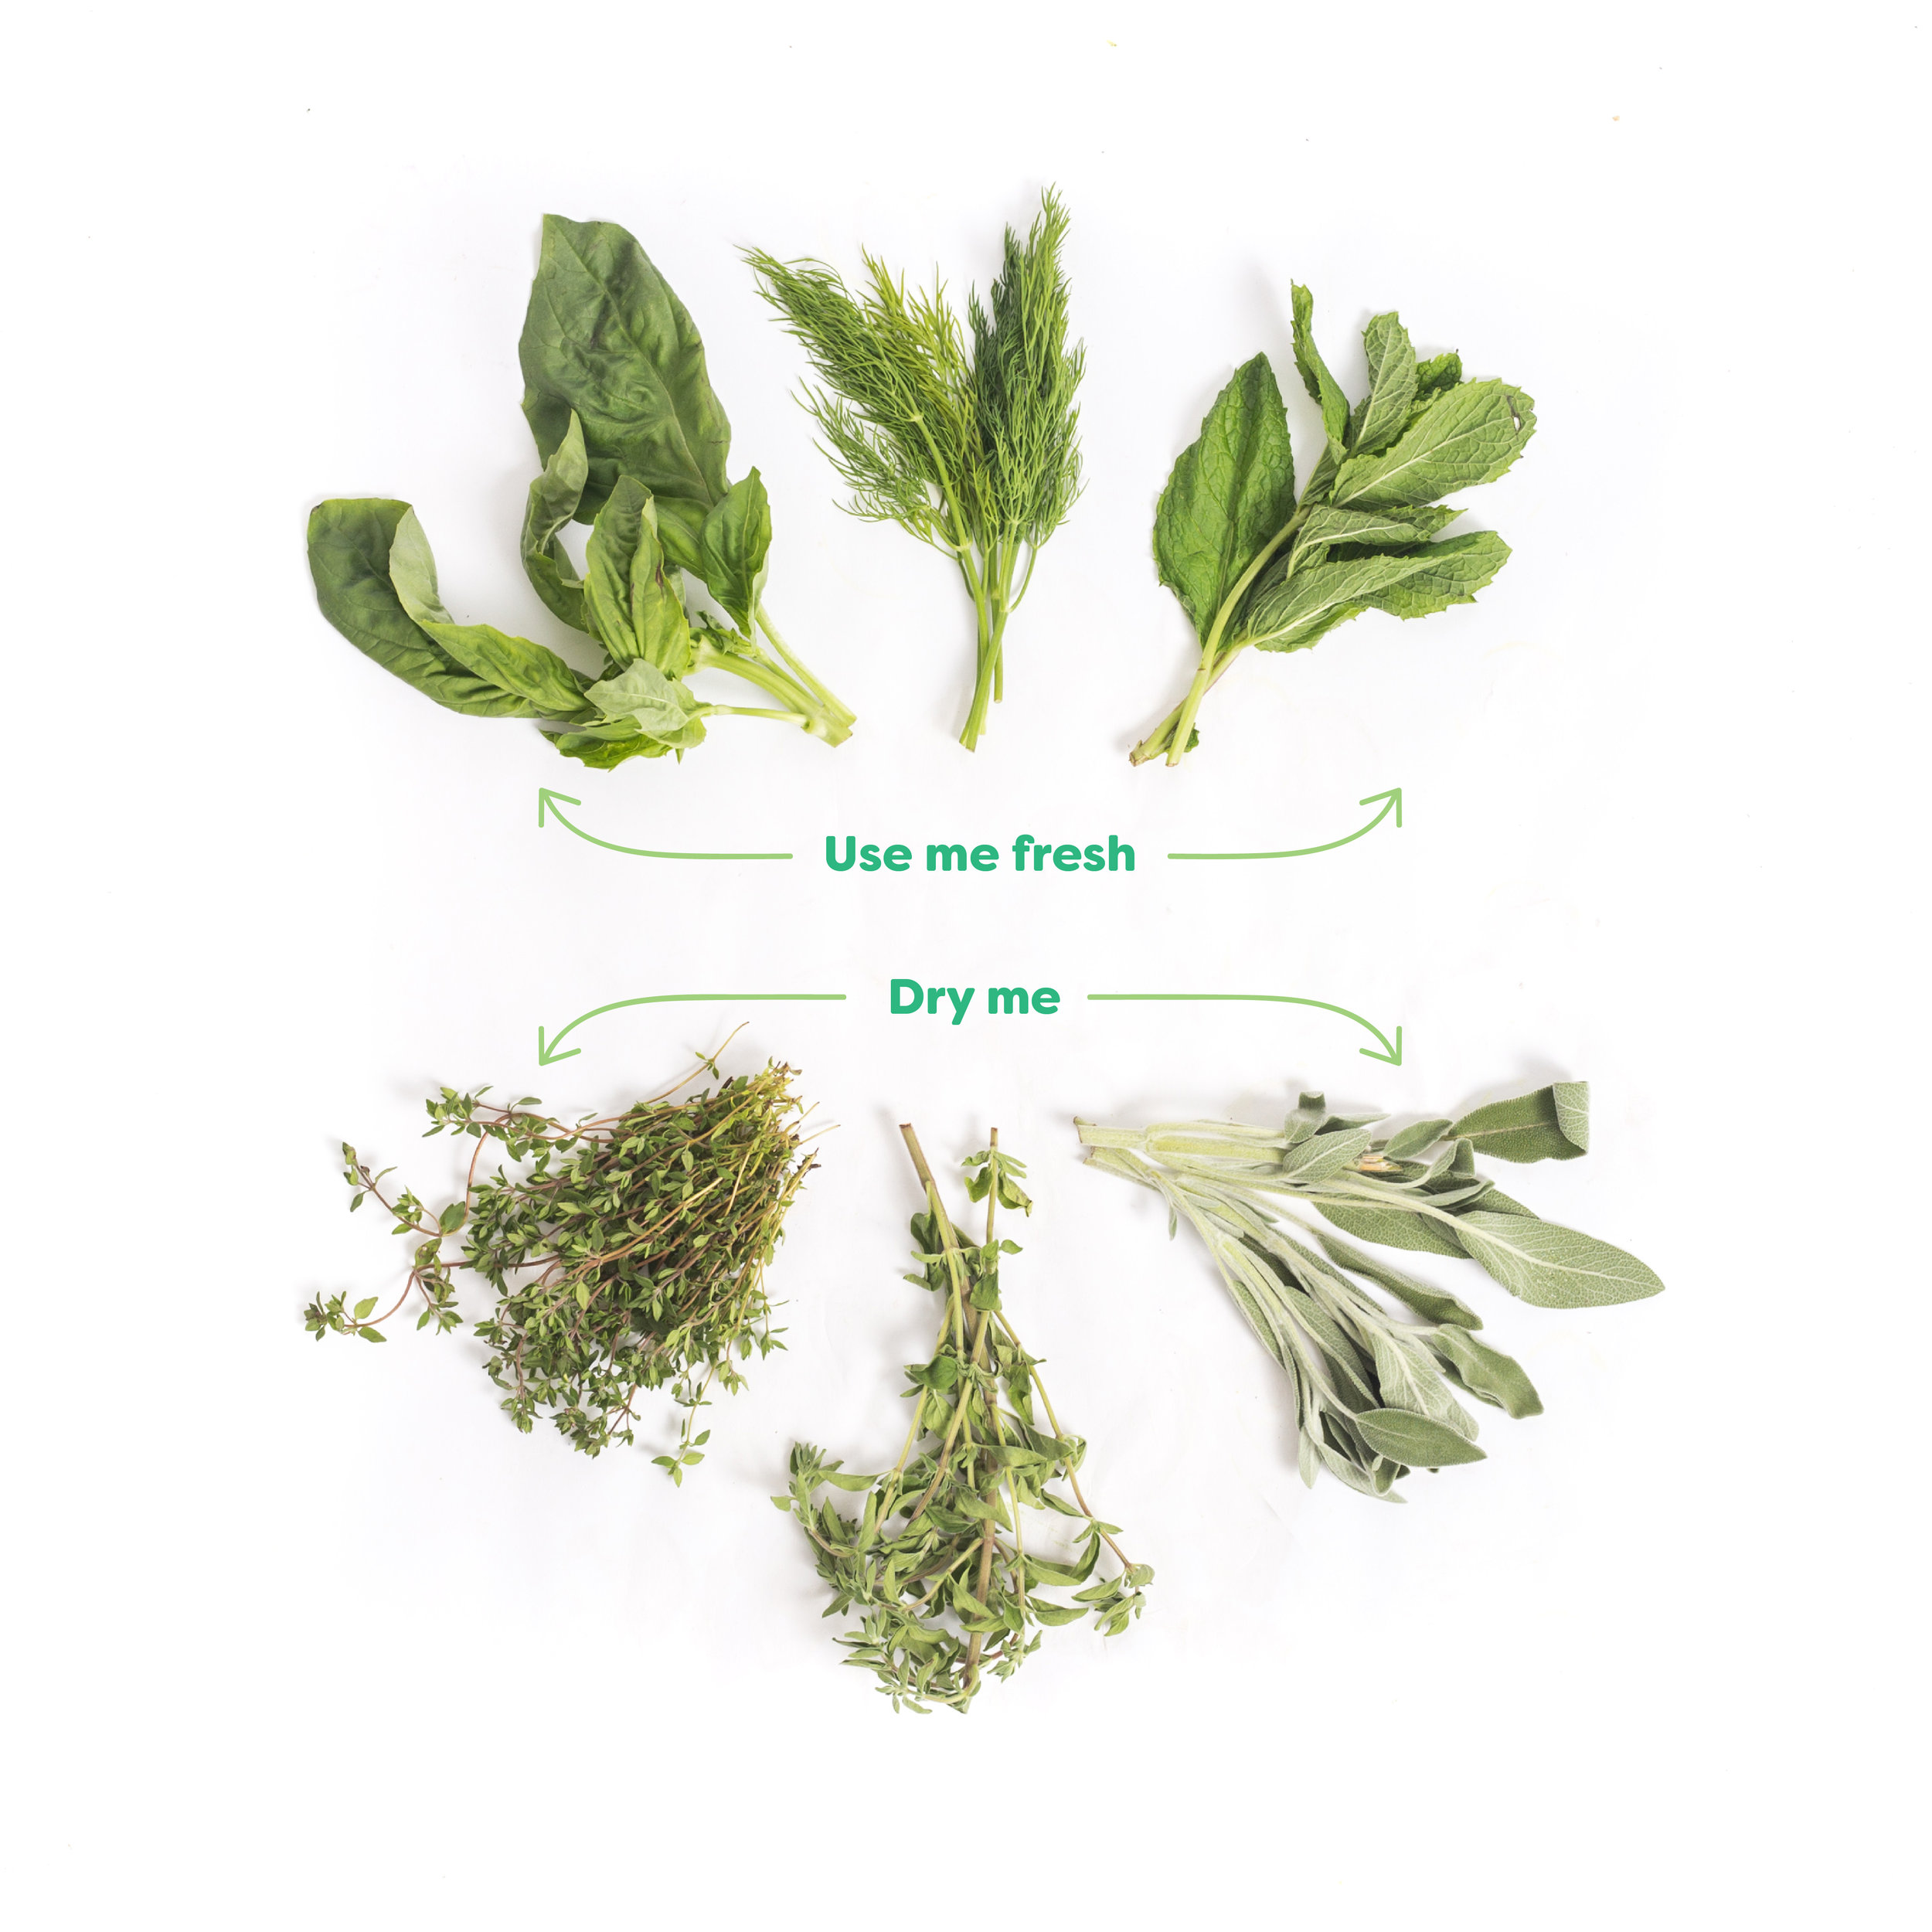 What the Fork: Fresh vs. Dry Herbs